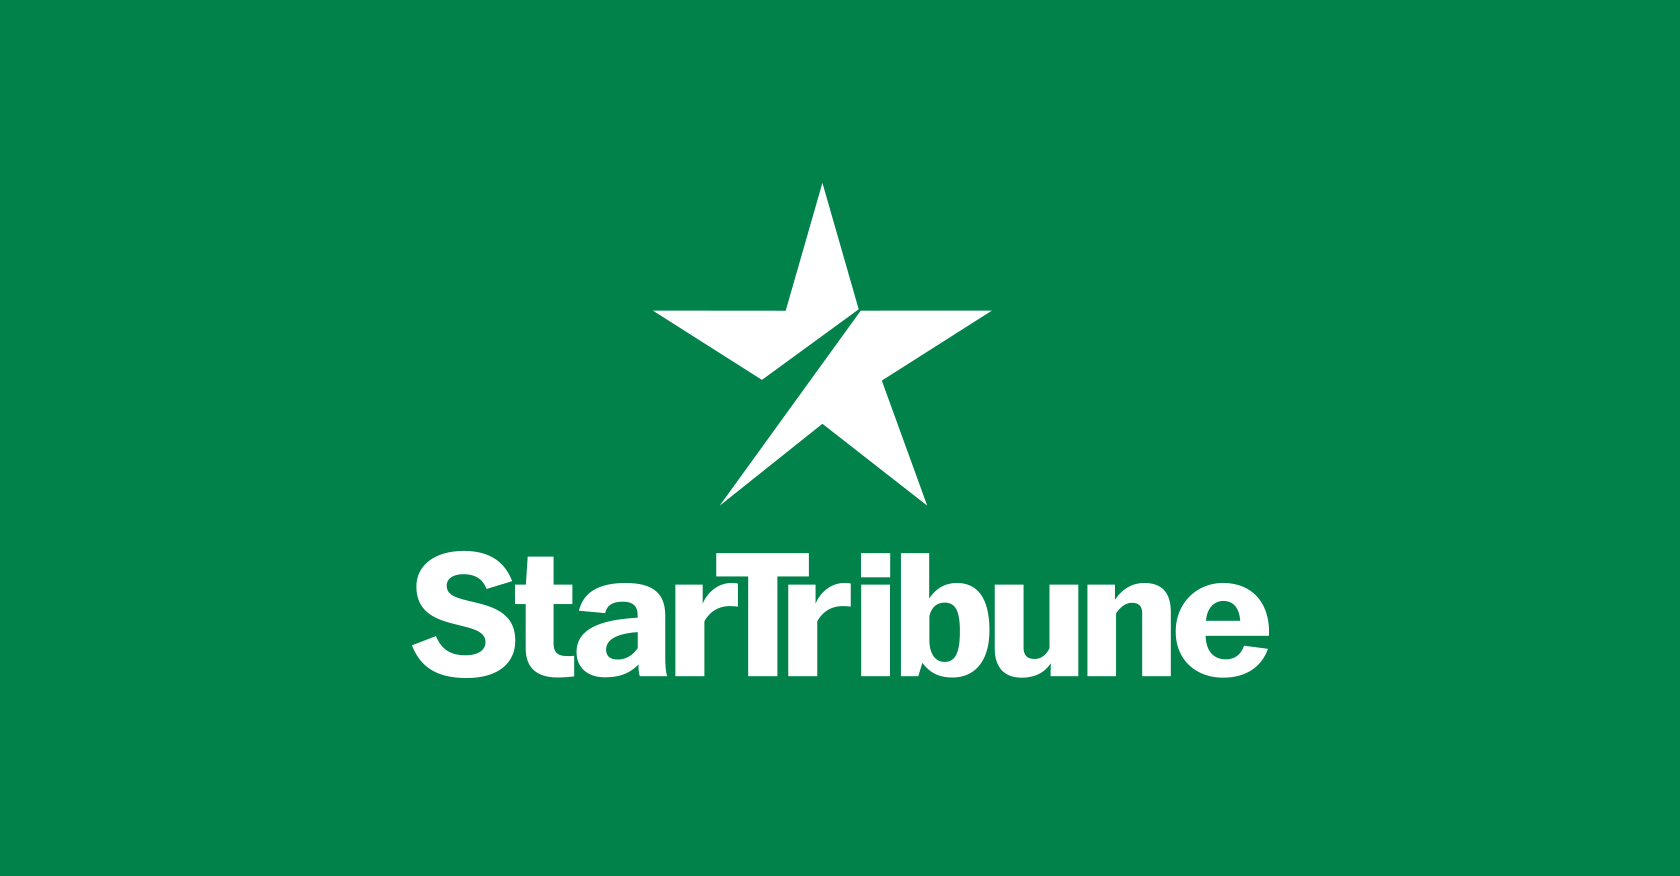 Wisconsin attorney general appeals redistricting ruling - Minneapolis Star Tribune